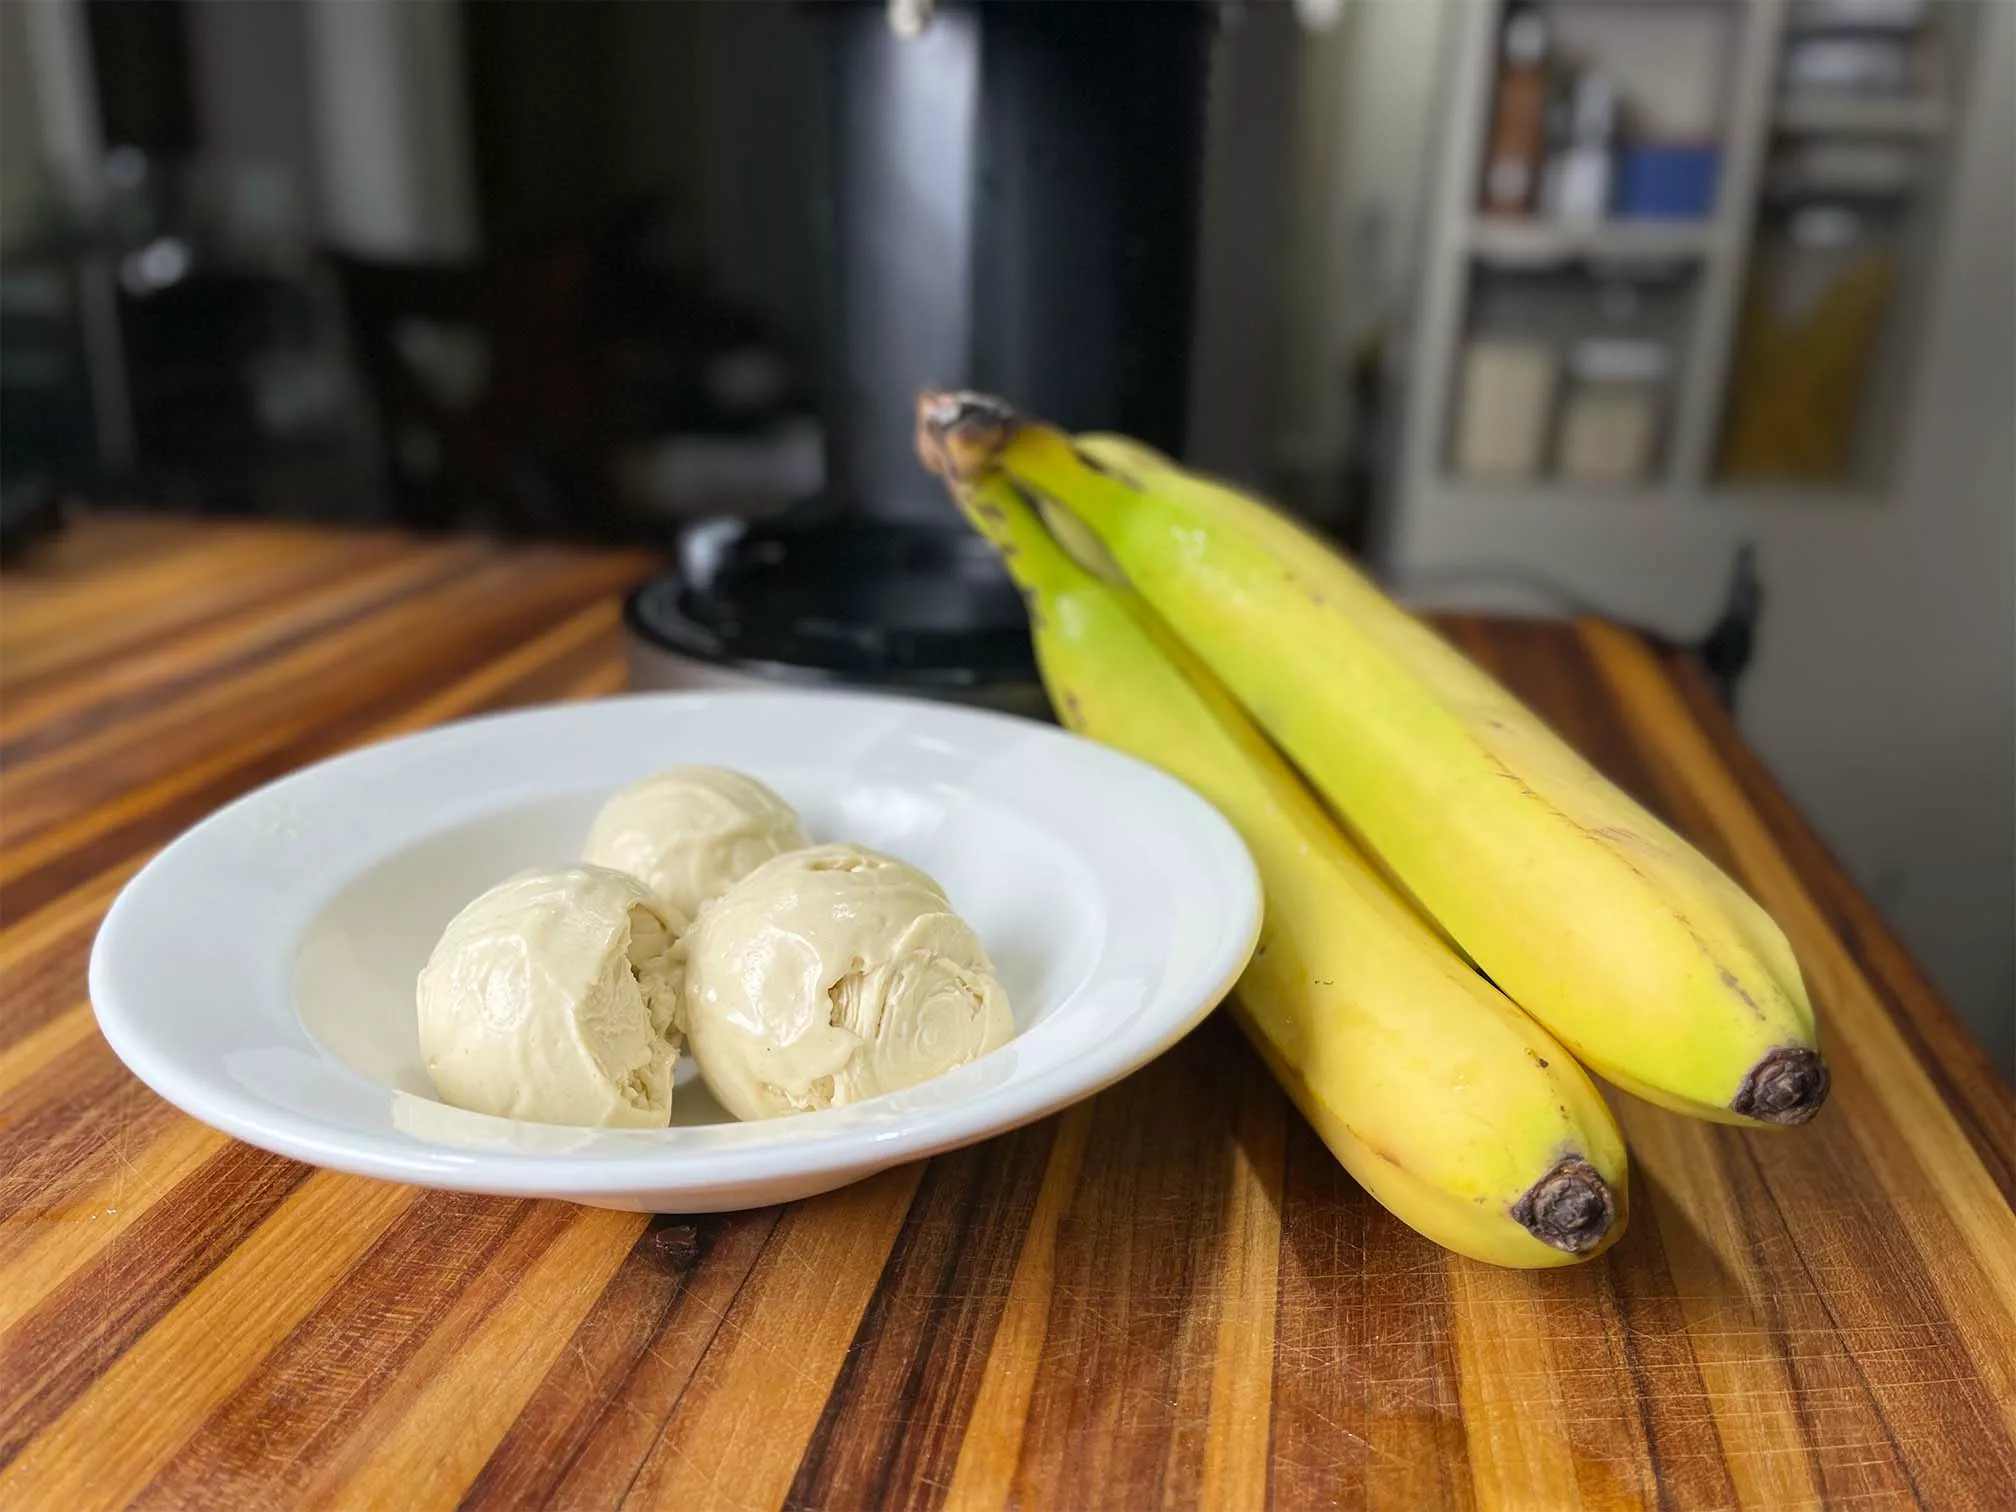 https://www.sizzleandsear.com/wp-content/uploads/2021/12/ninja-creami-review-banana-ice-cream-jpg.webp